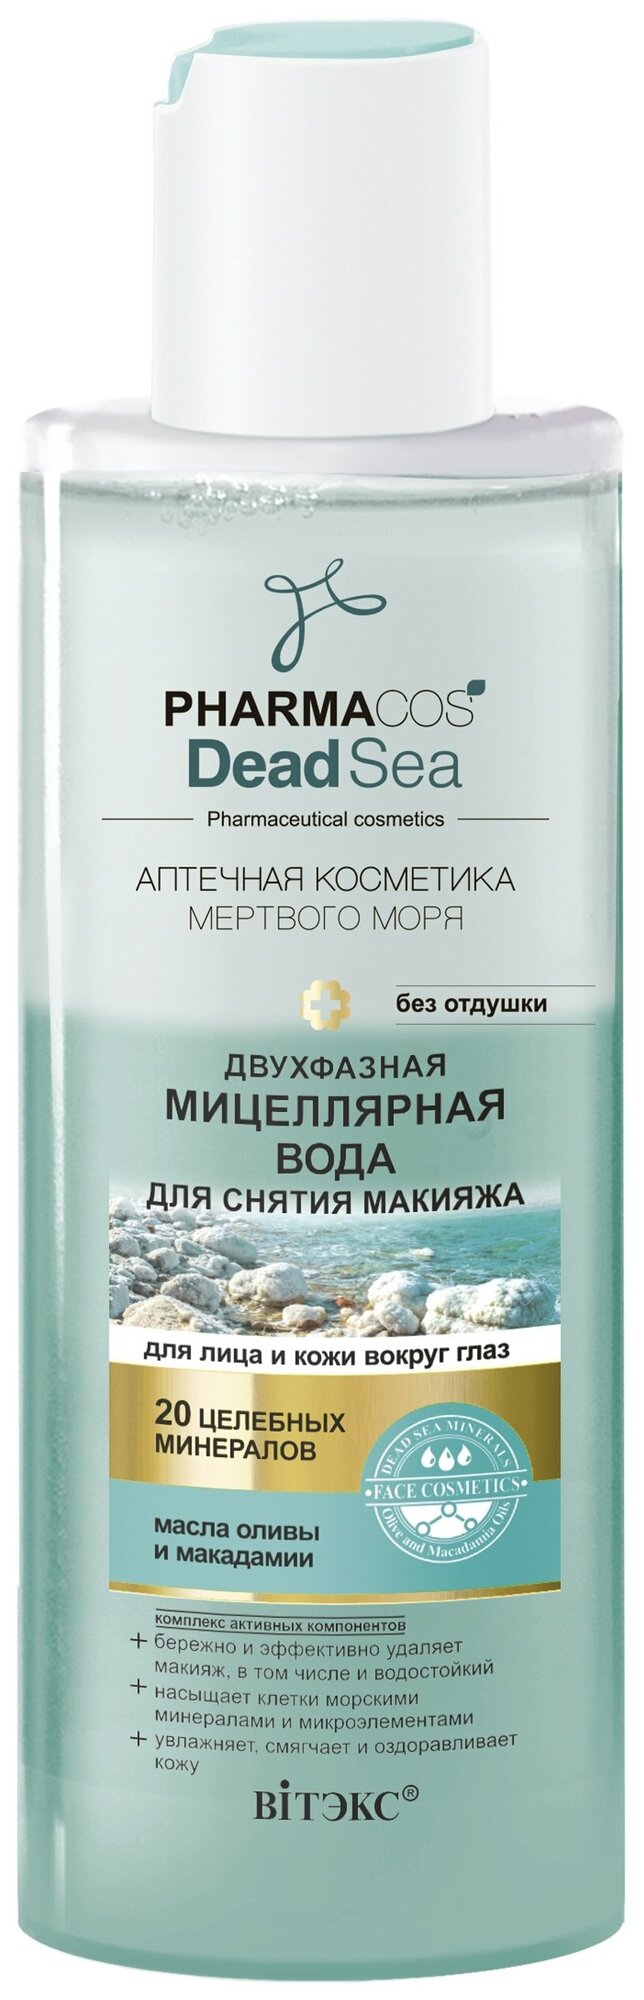 Витэкс Pharmacos Dead Sea Мицеллярная вода двухфазная для снятия макияжа, 150 мл